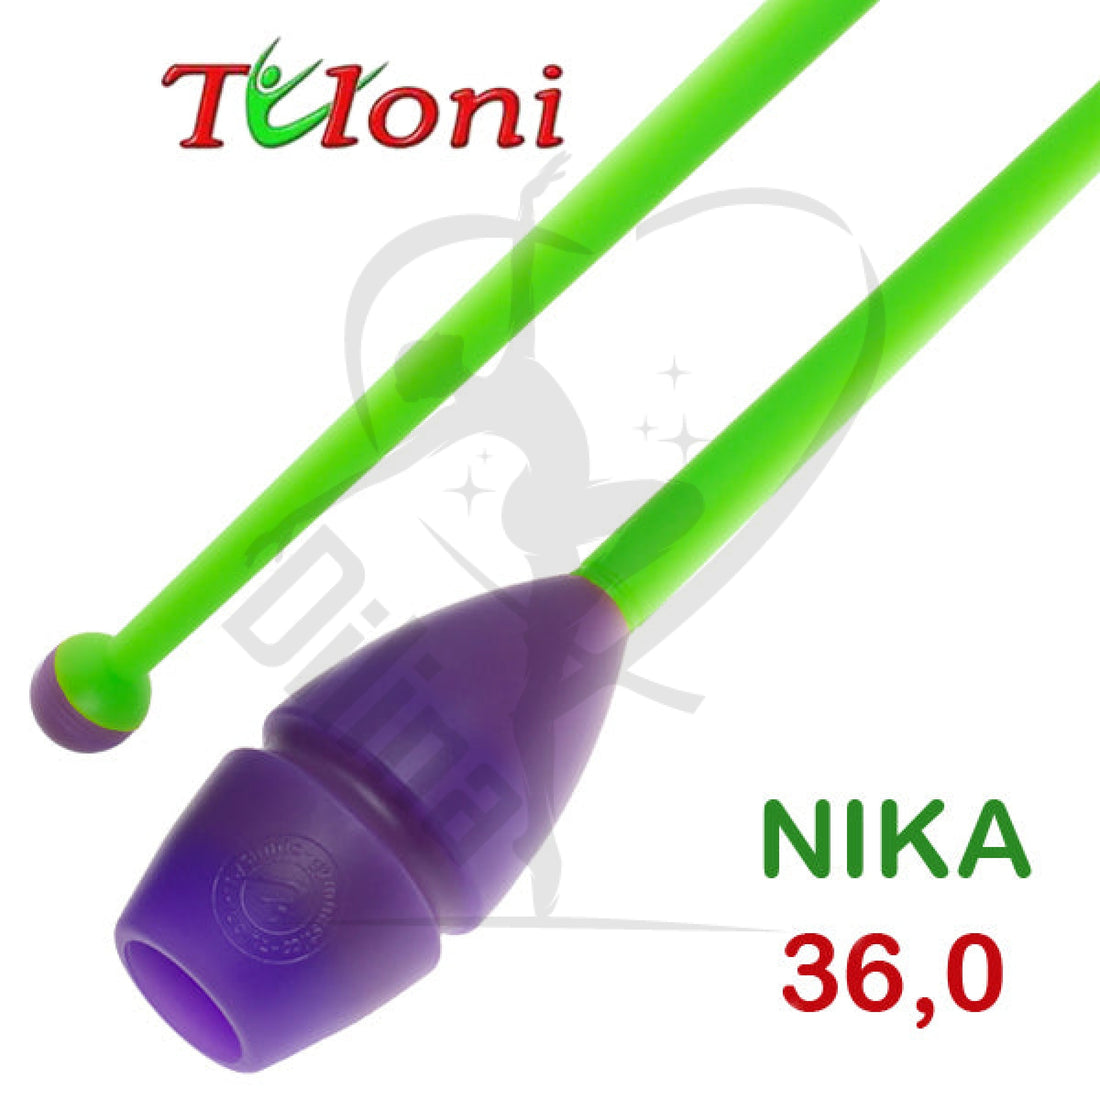 Tuloni Bi-Colour Connectable Clubs Mos. Nika 36Cm Purple X Green